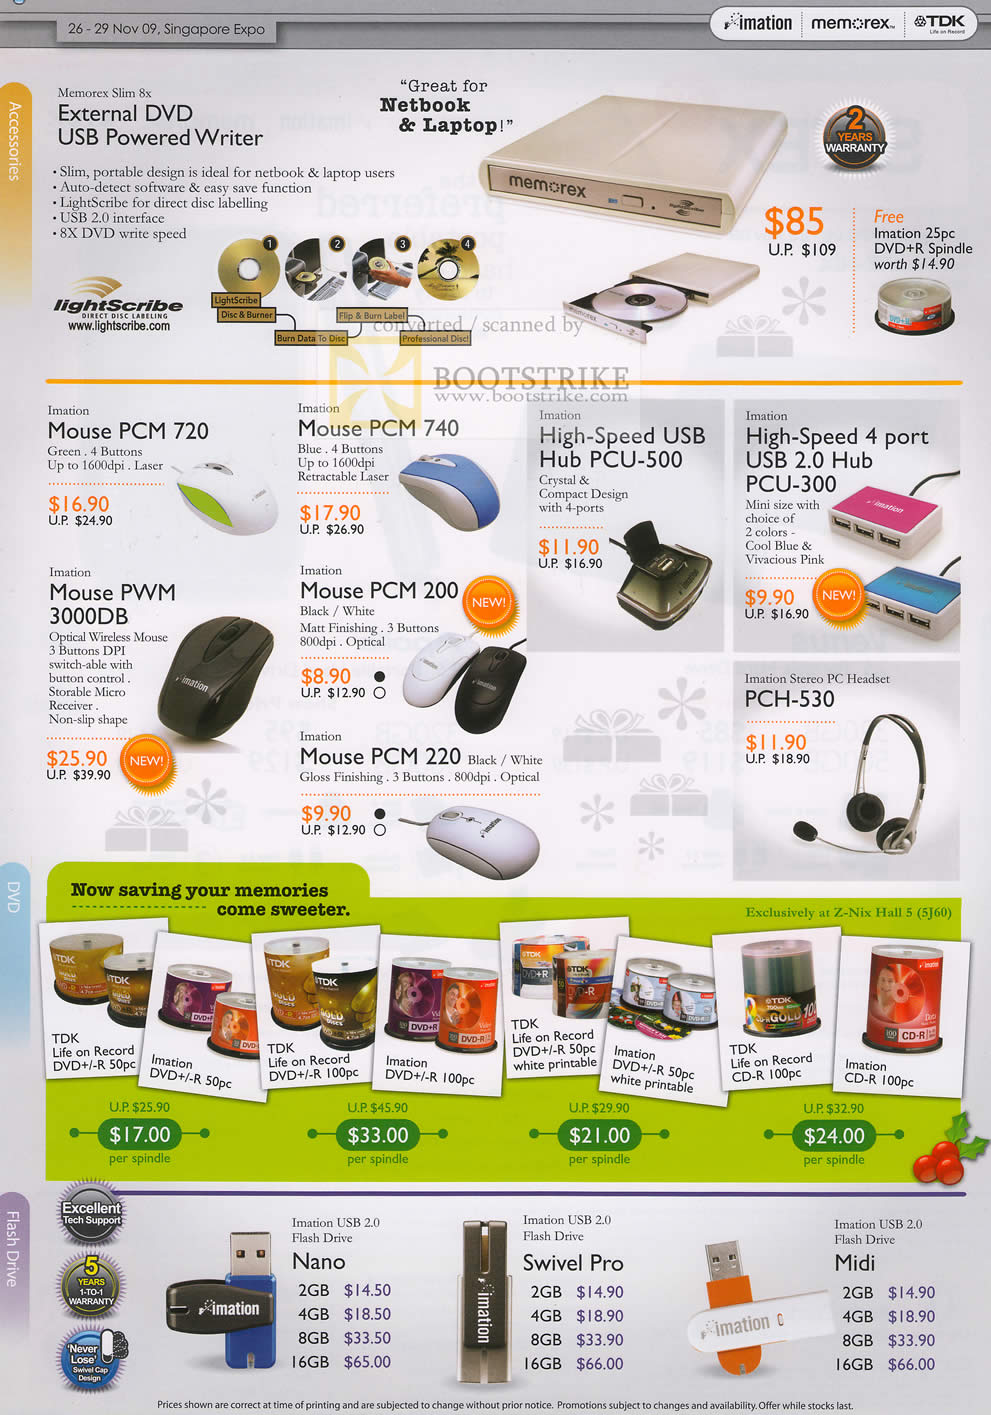 Sitex 2009 price list image brochure of Imation Memorex External DVD Writer Mouse Hub Flash Drive